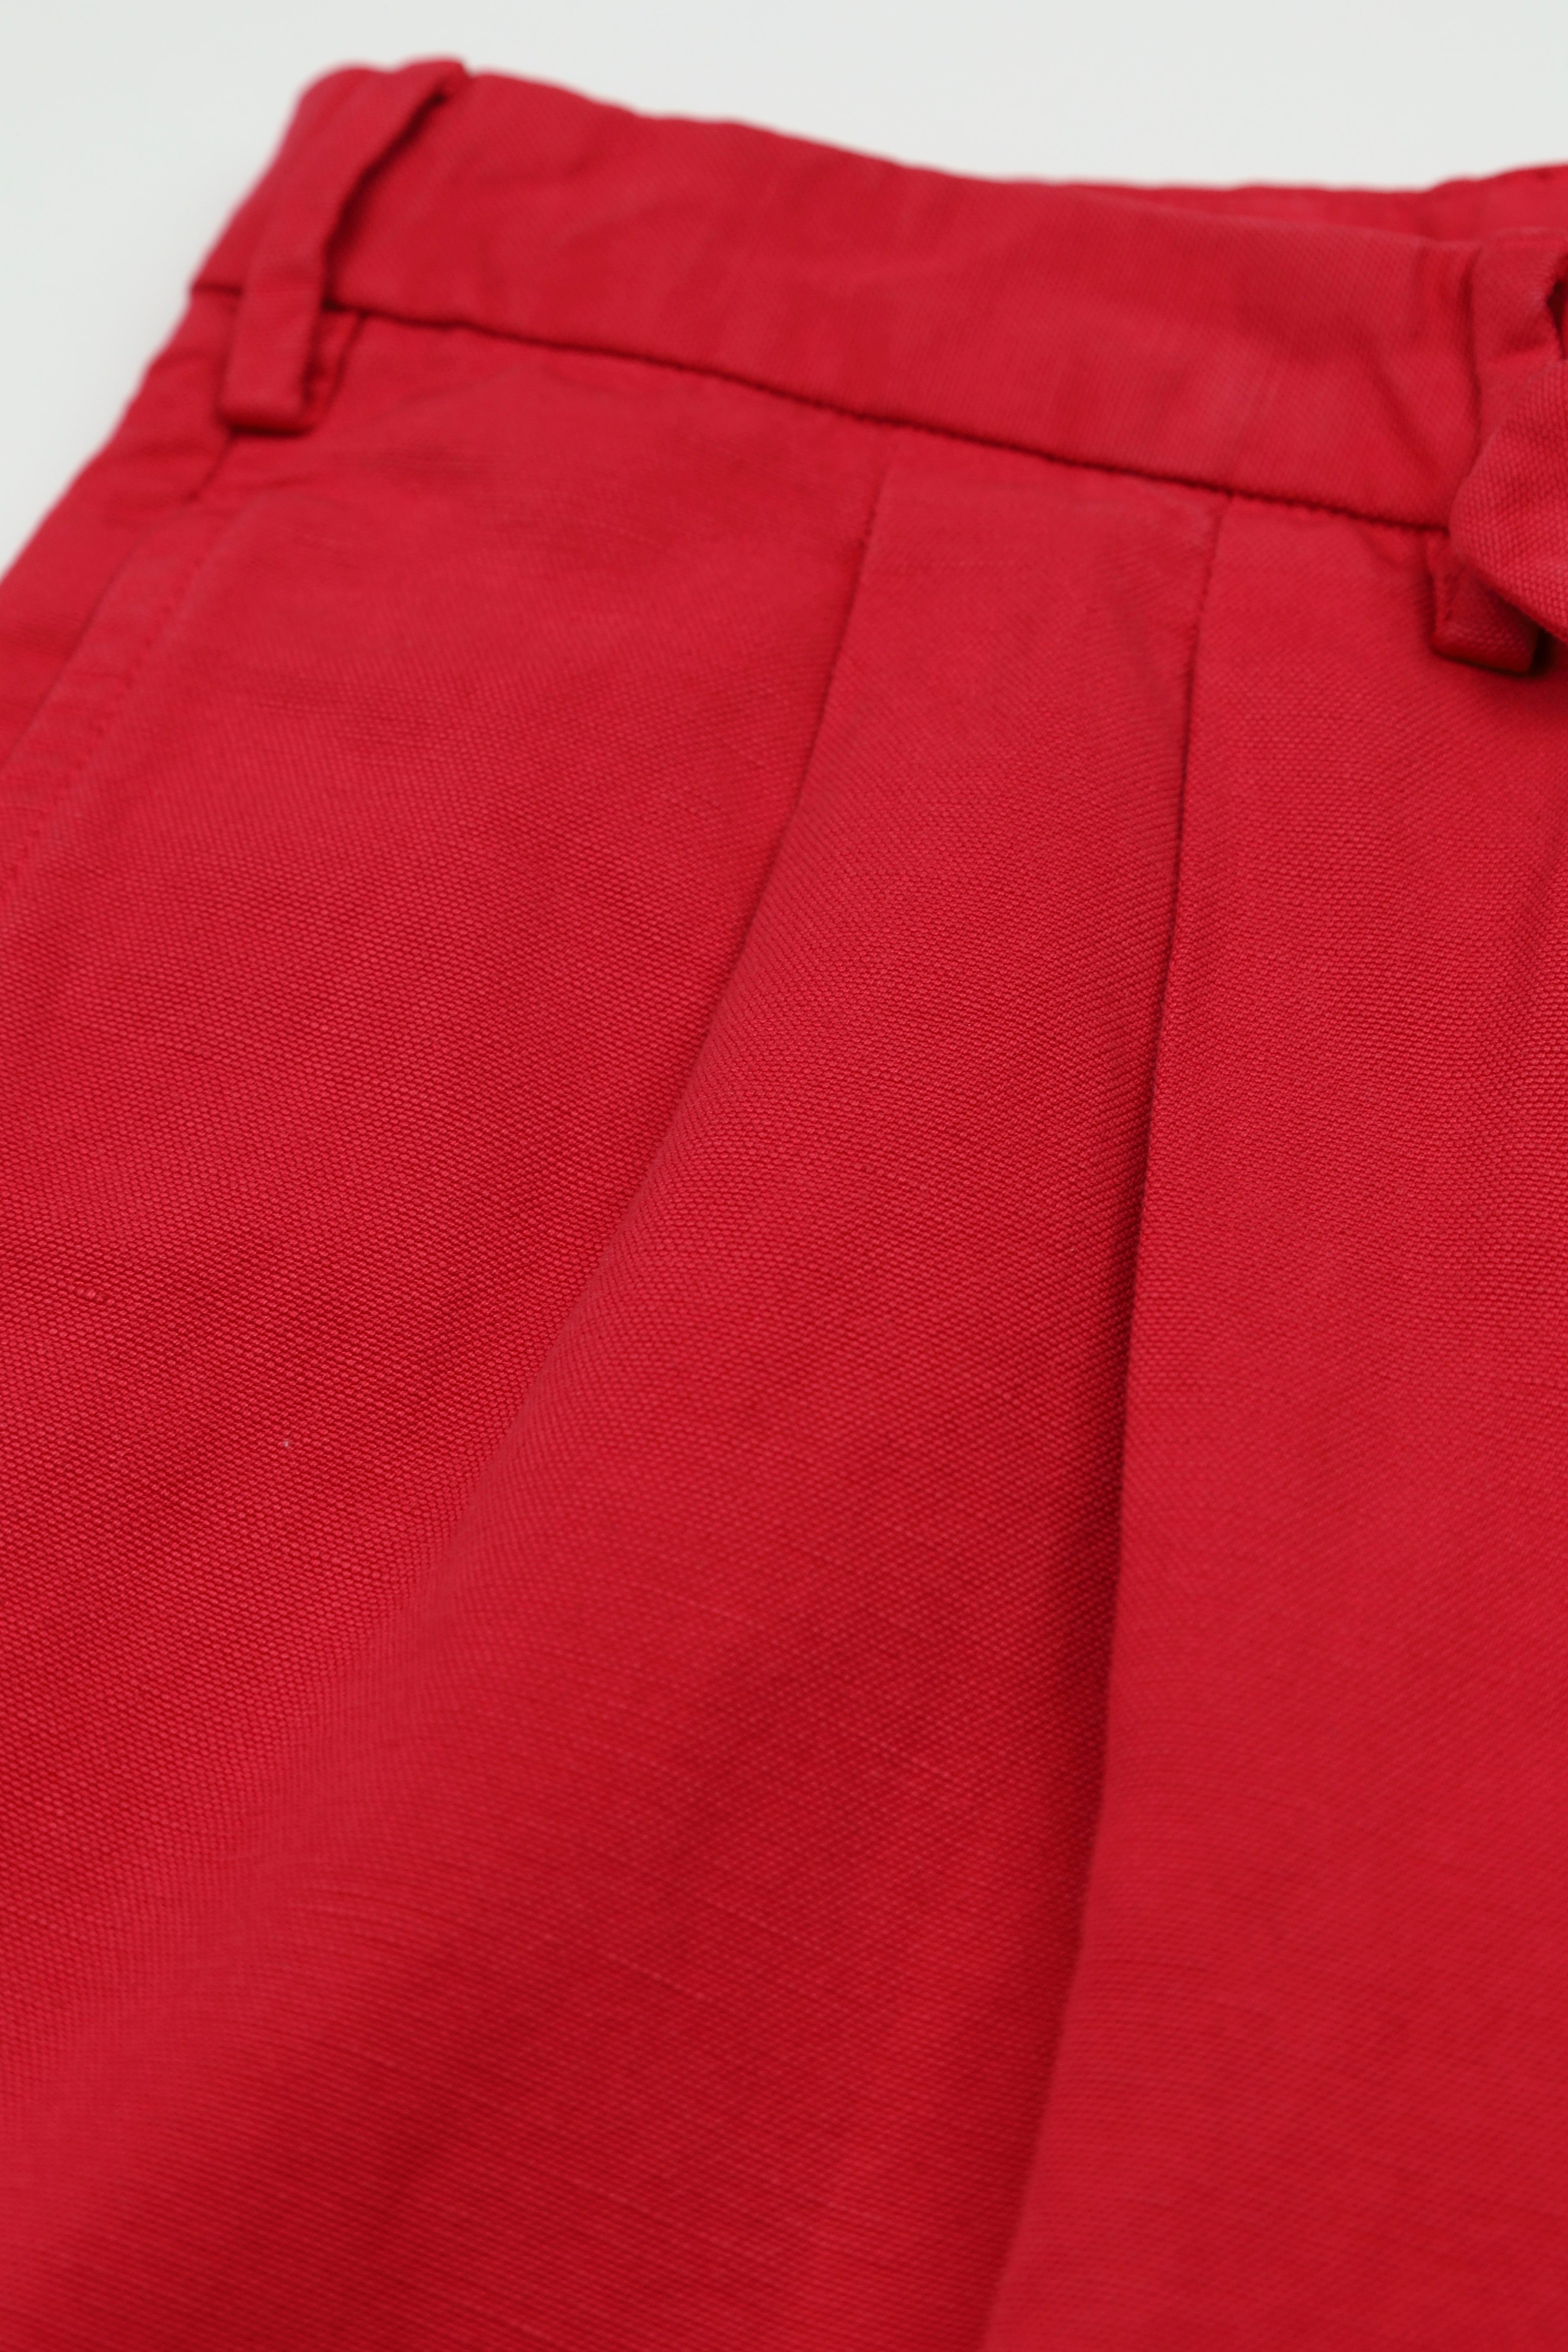 Loro Piana Red Cotton & Linen "Blaricum" Pleated Trousers